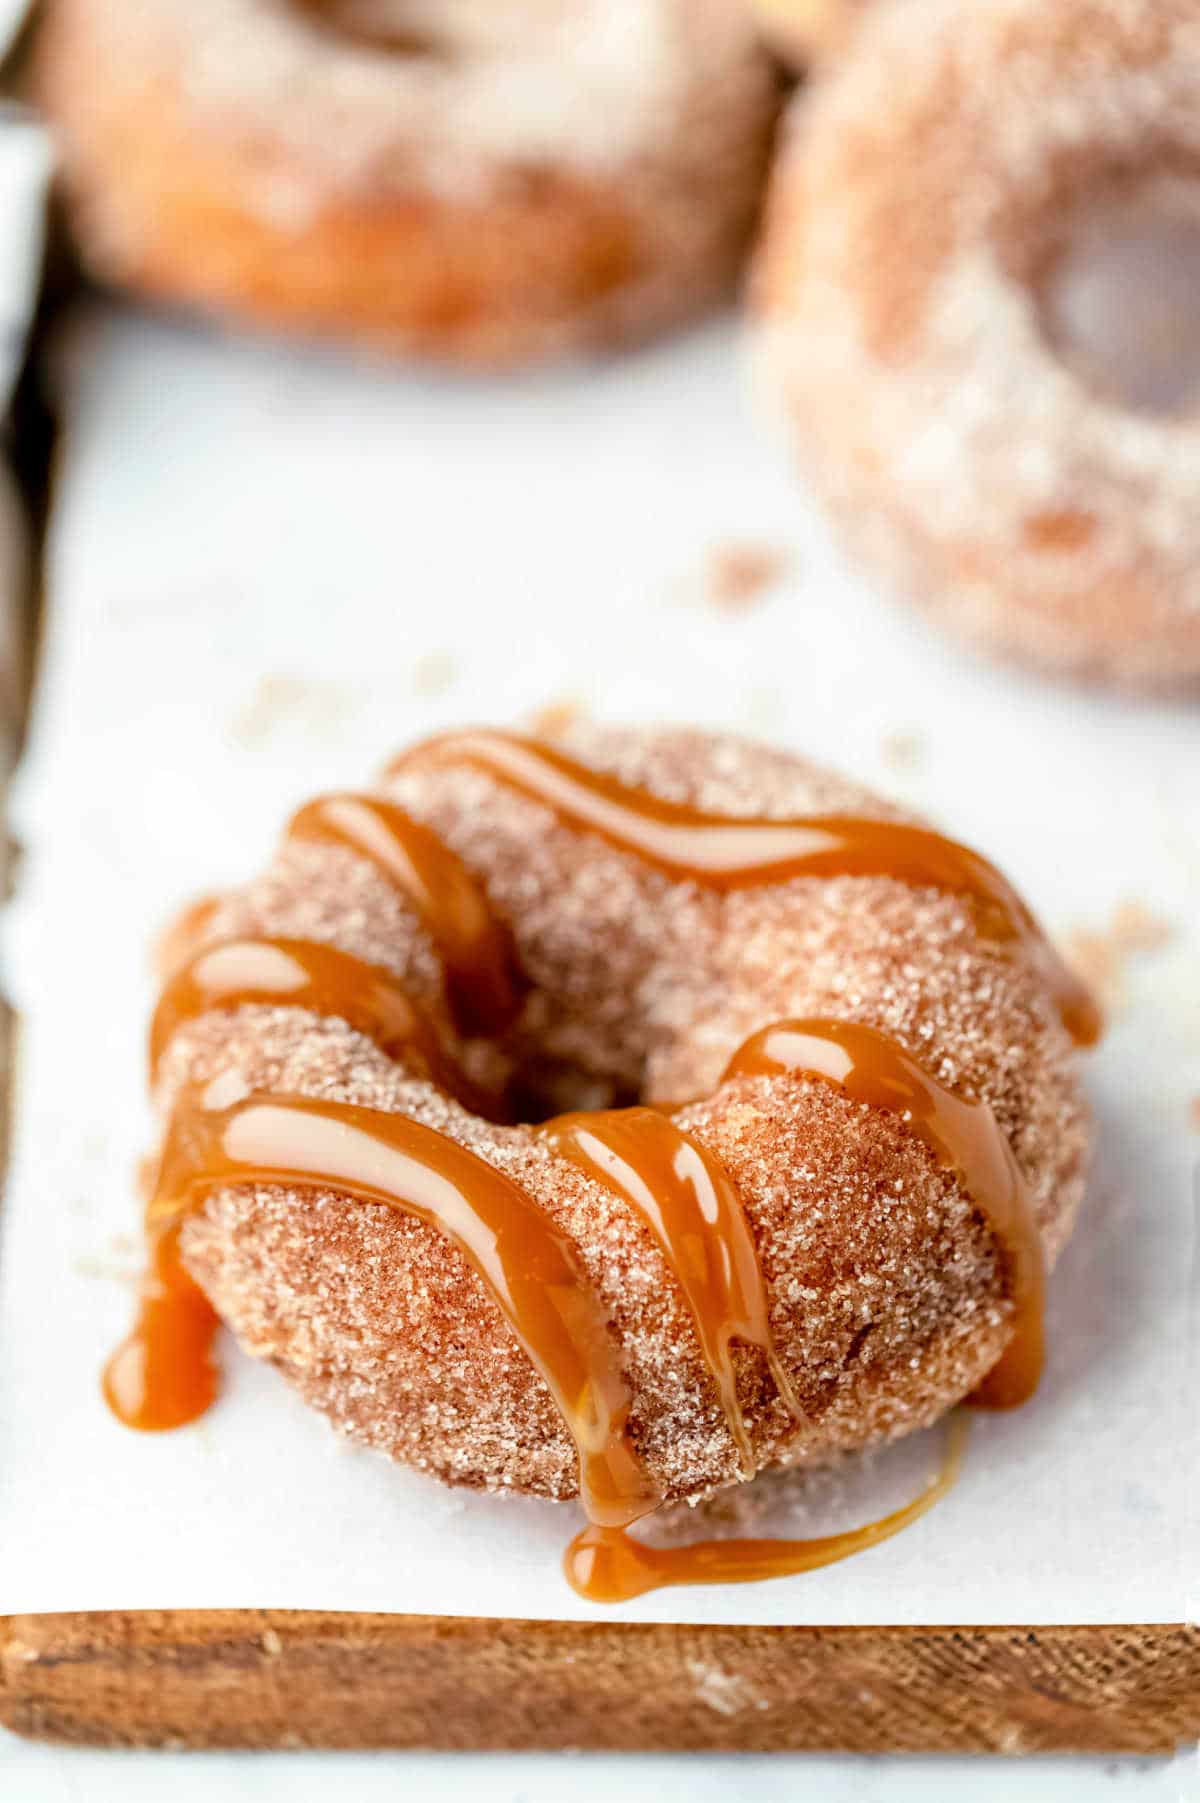 Churro donut topped with caramel.